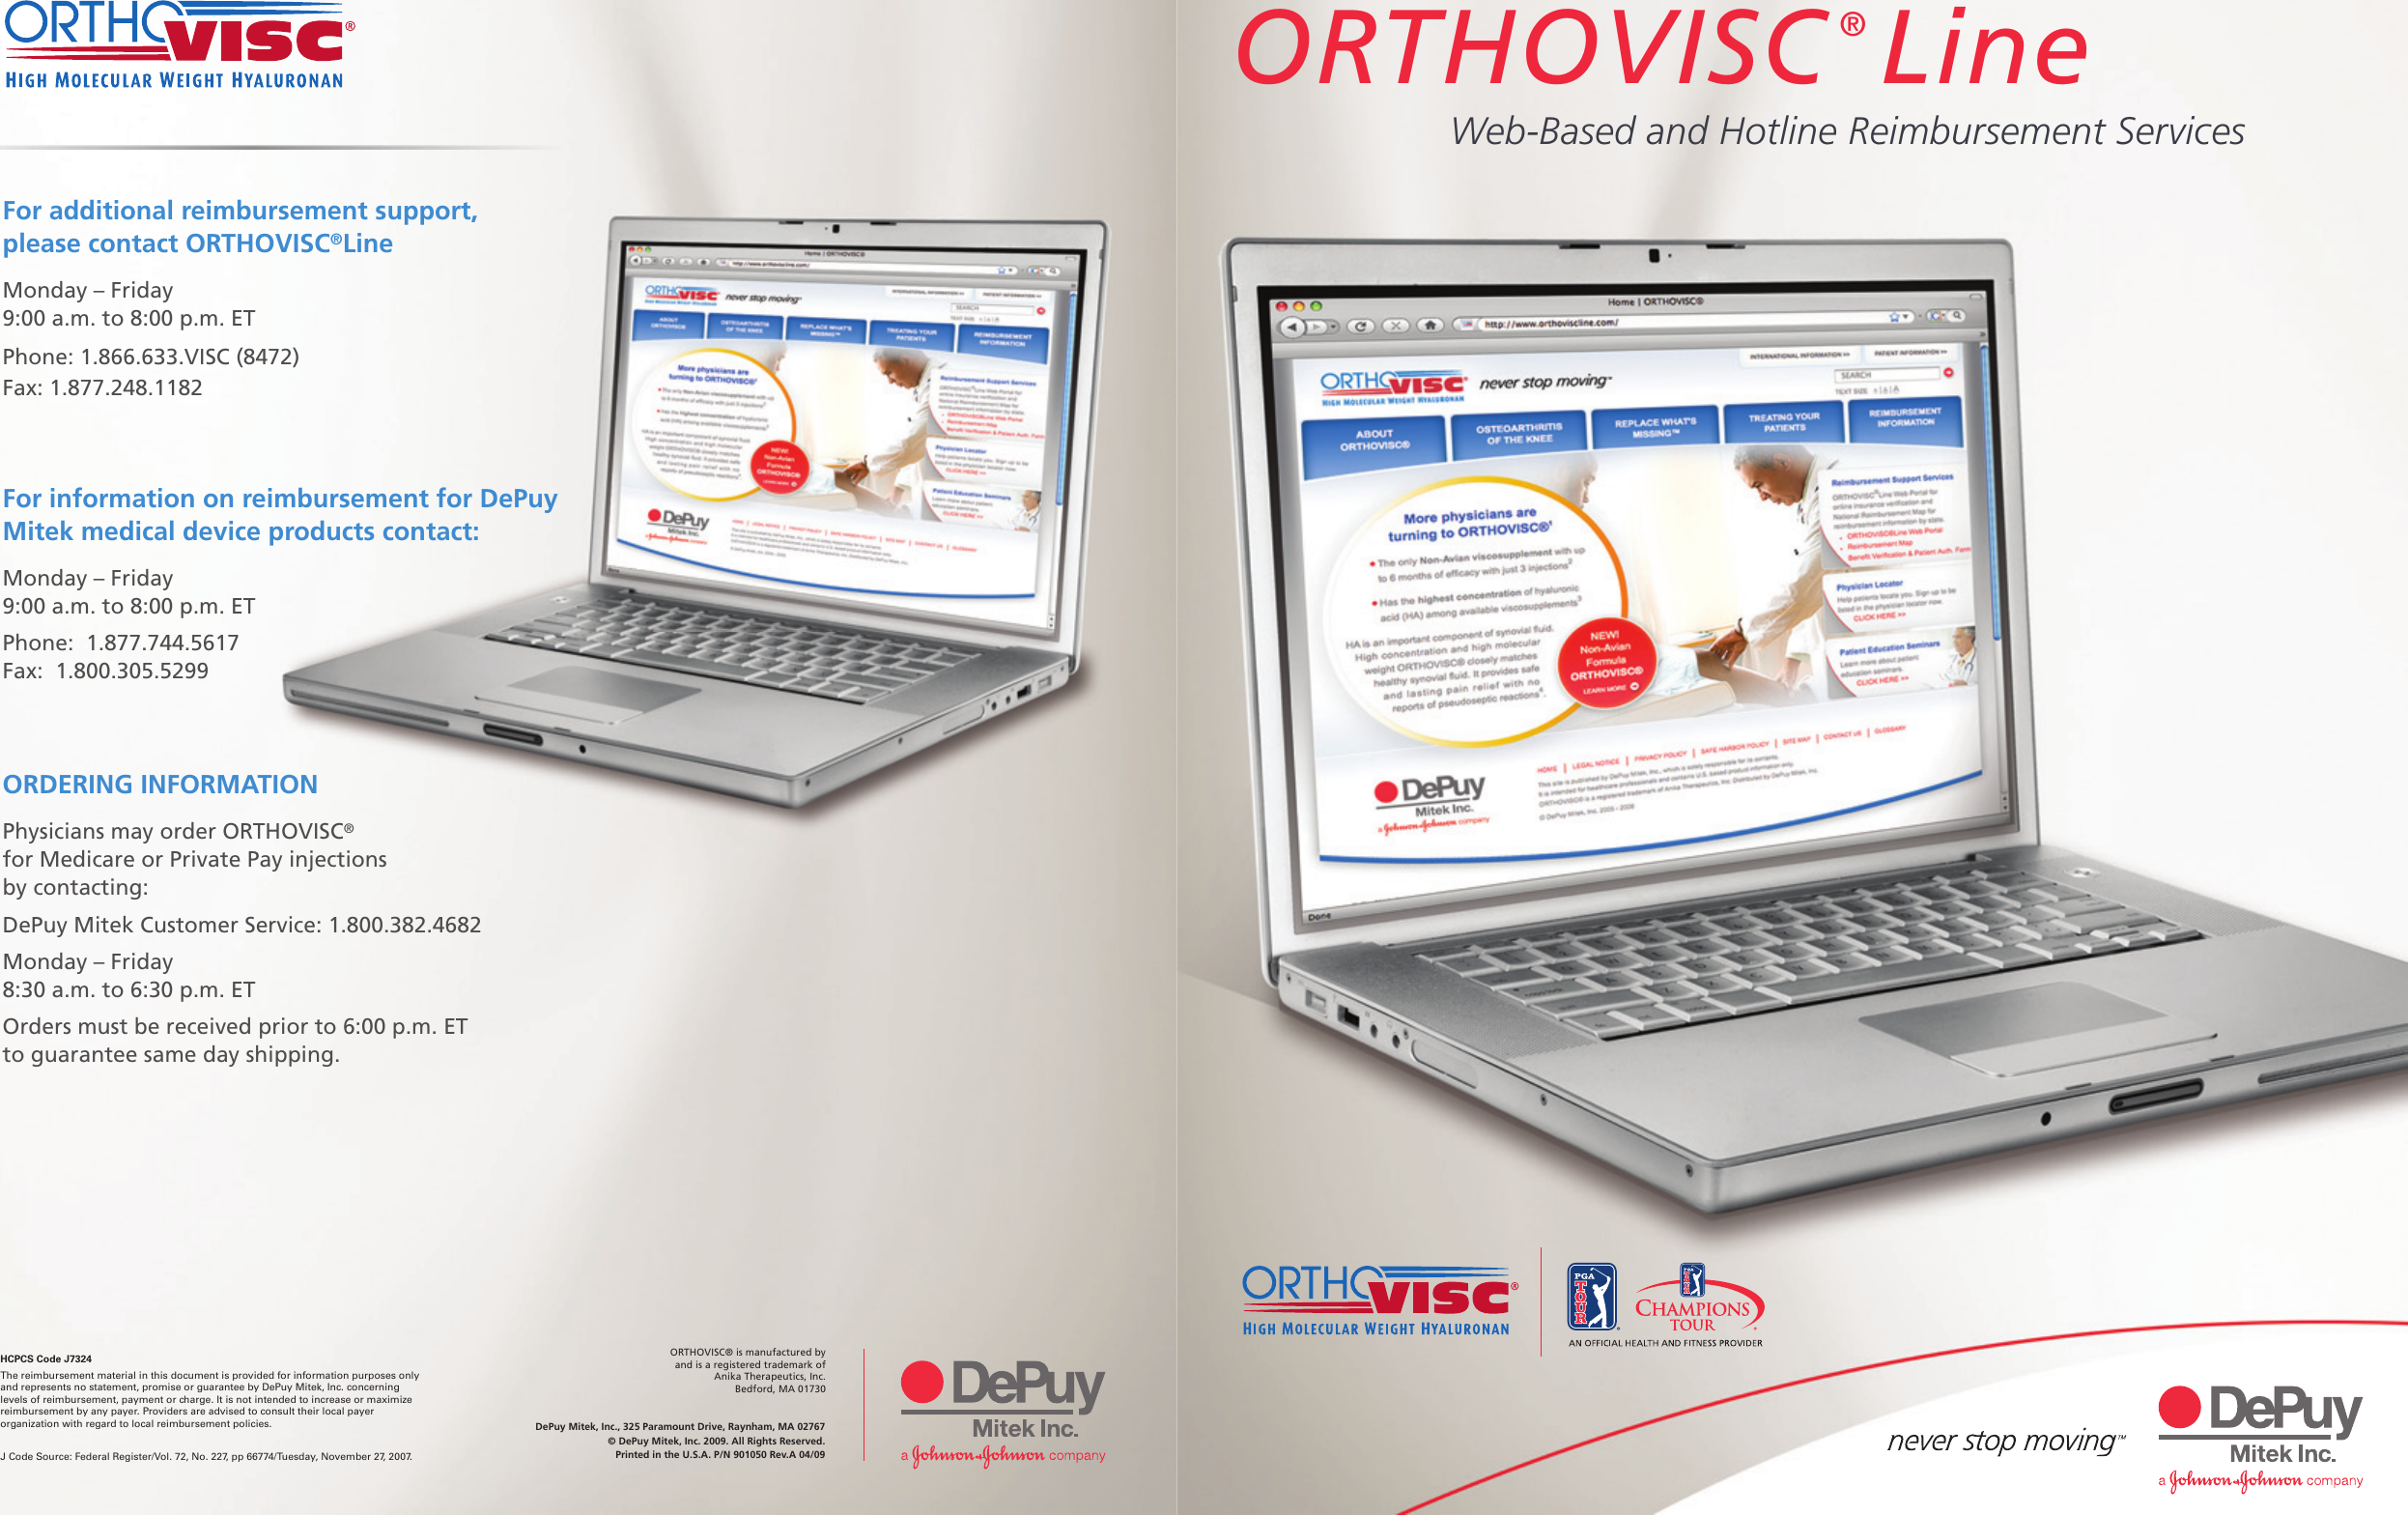 Page 1 of 3 - ORTHOVISC Reimbursement Brochure